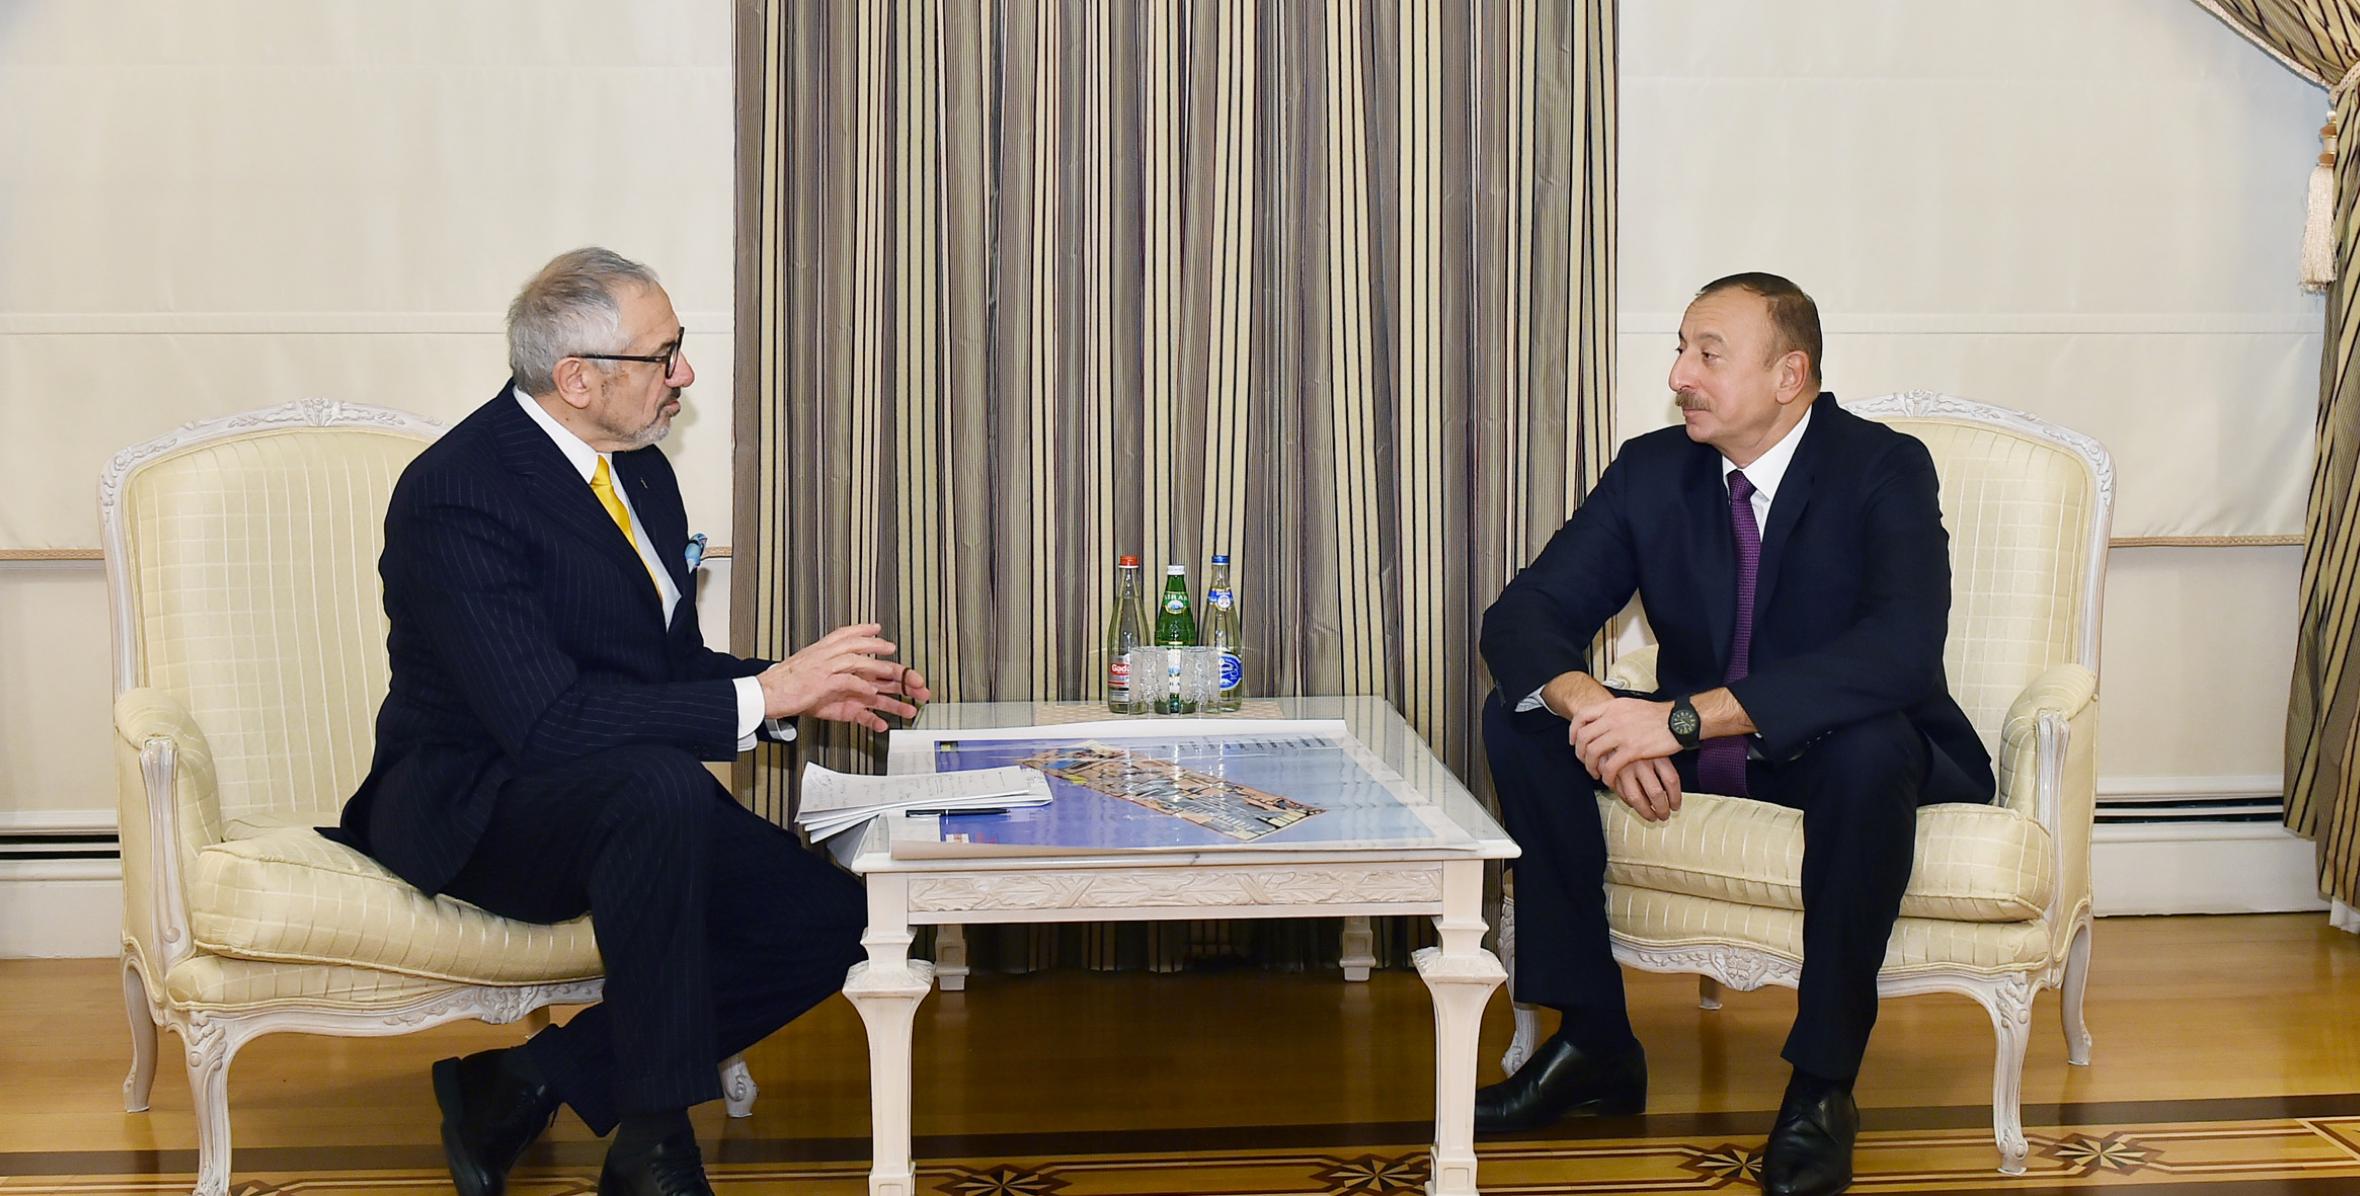 Ilham Aliyev received Chairman of the Board at Danieli & C. Officine Meccaniche S.p.A